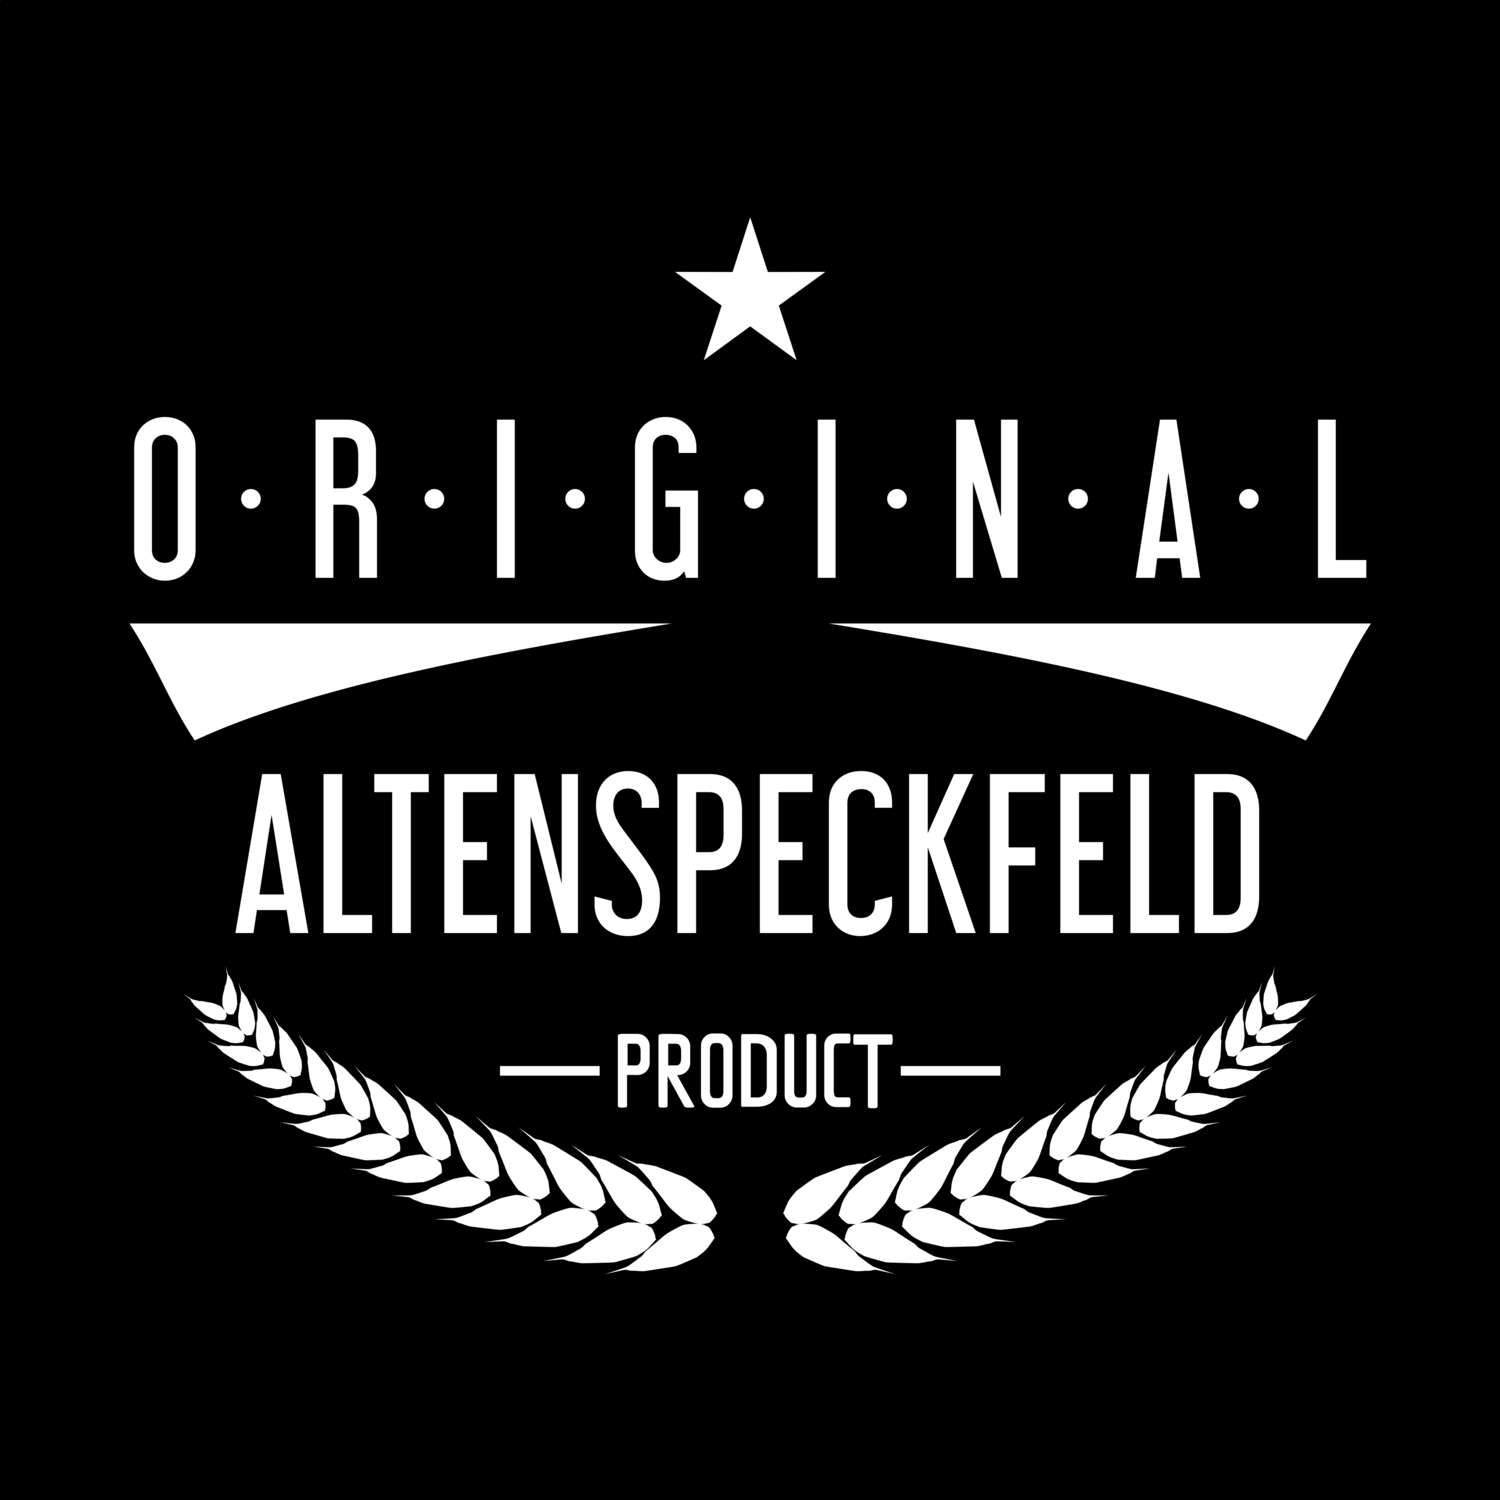 Altenspeckfeld T-Shirt »Original Product«